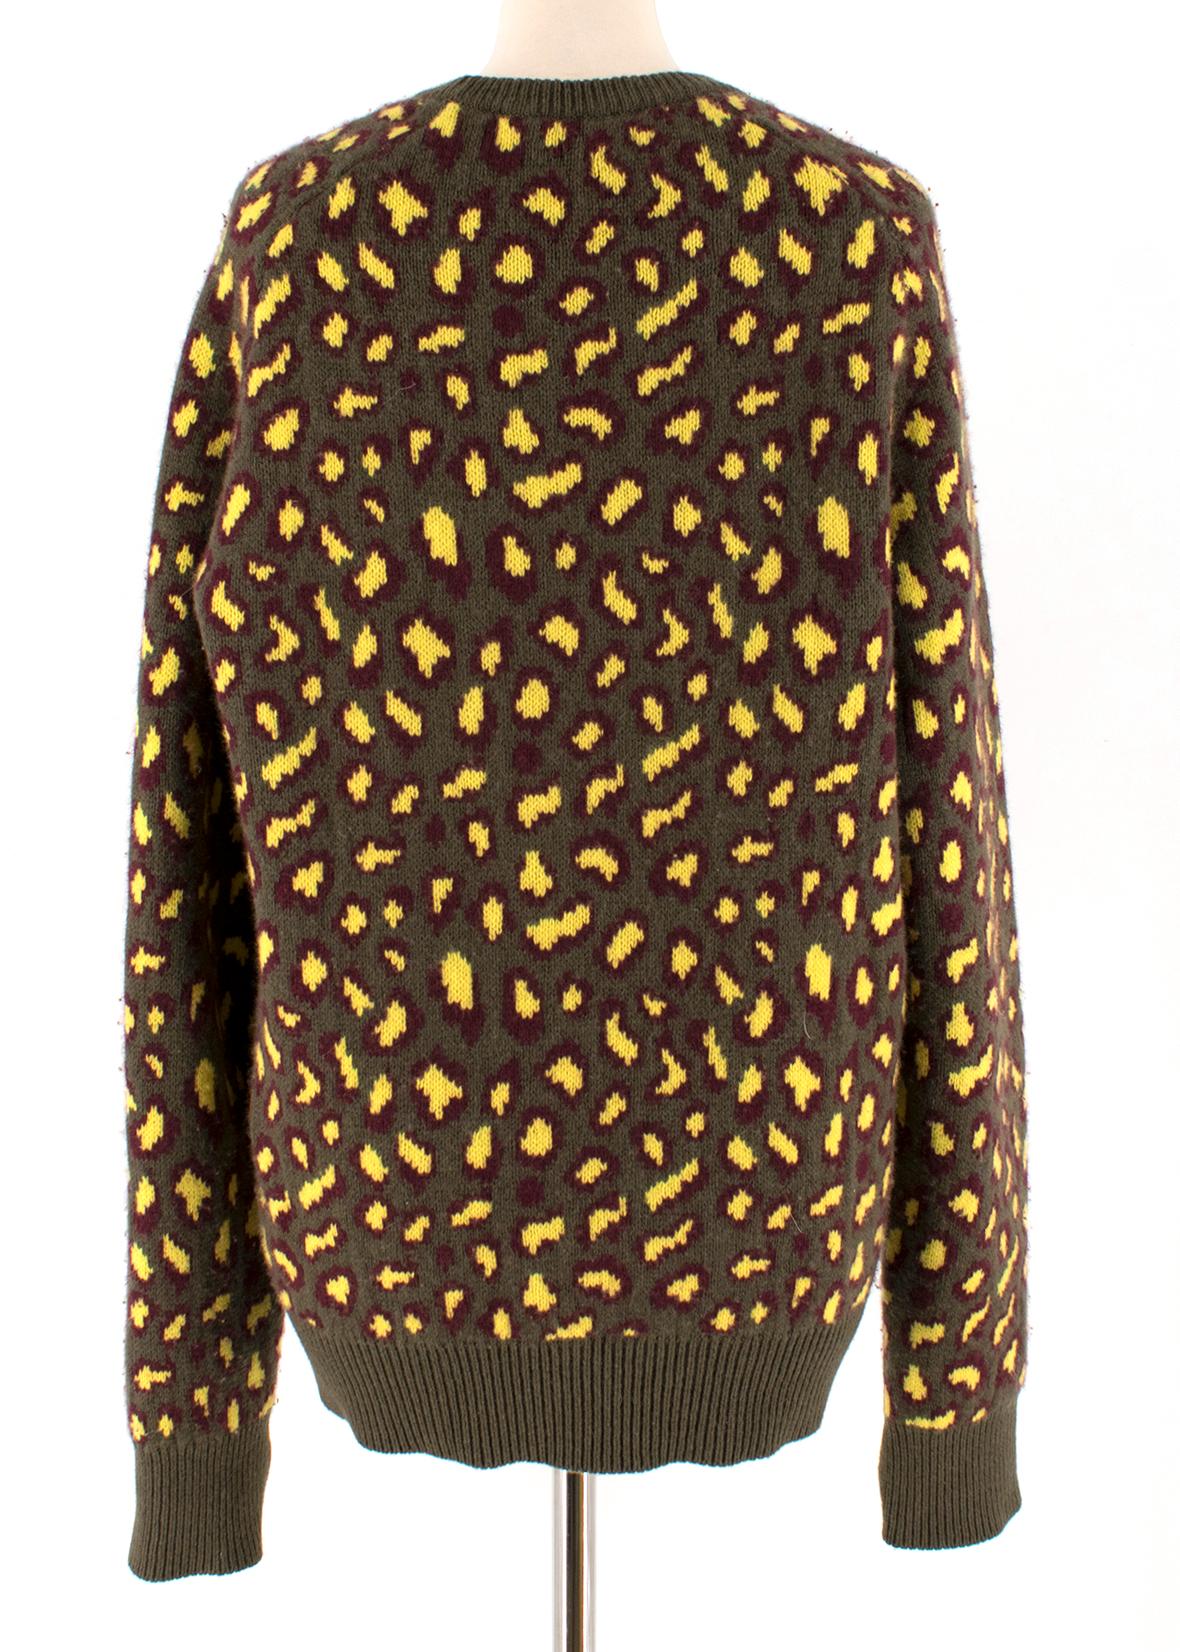 Beige Christopher Kane Khaki & Yellow Leopard Print Cashmere Sweater SIZE S